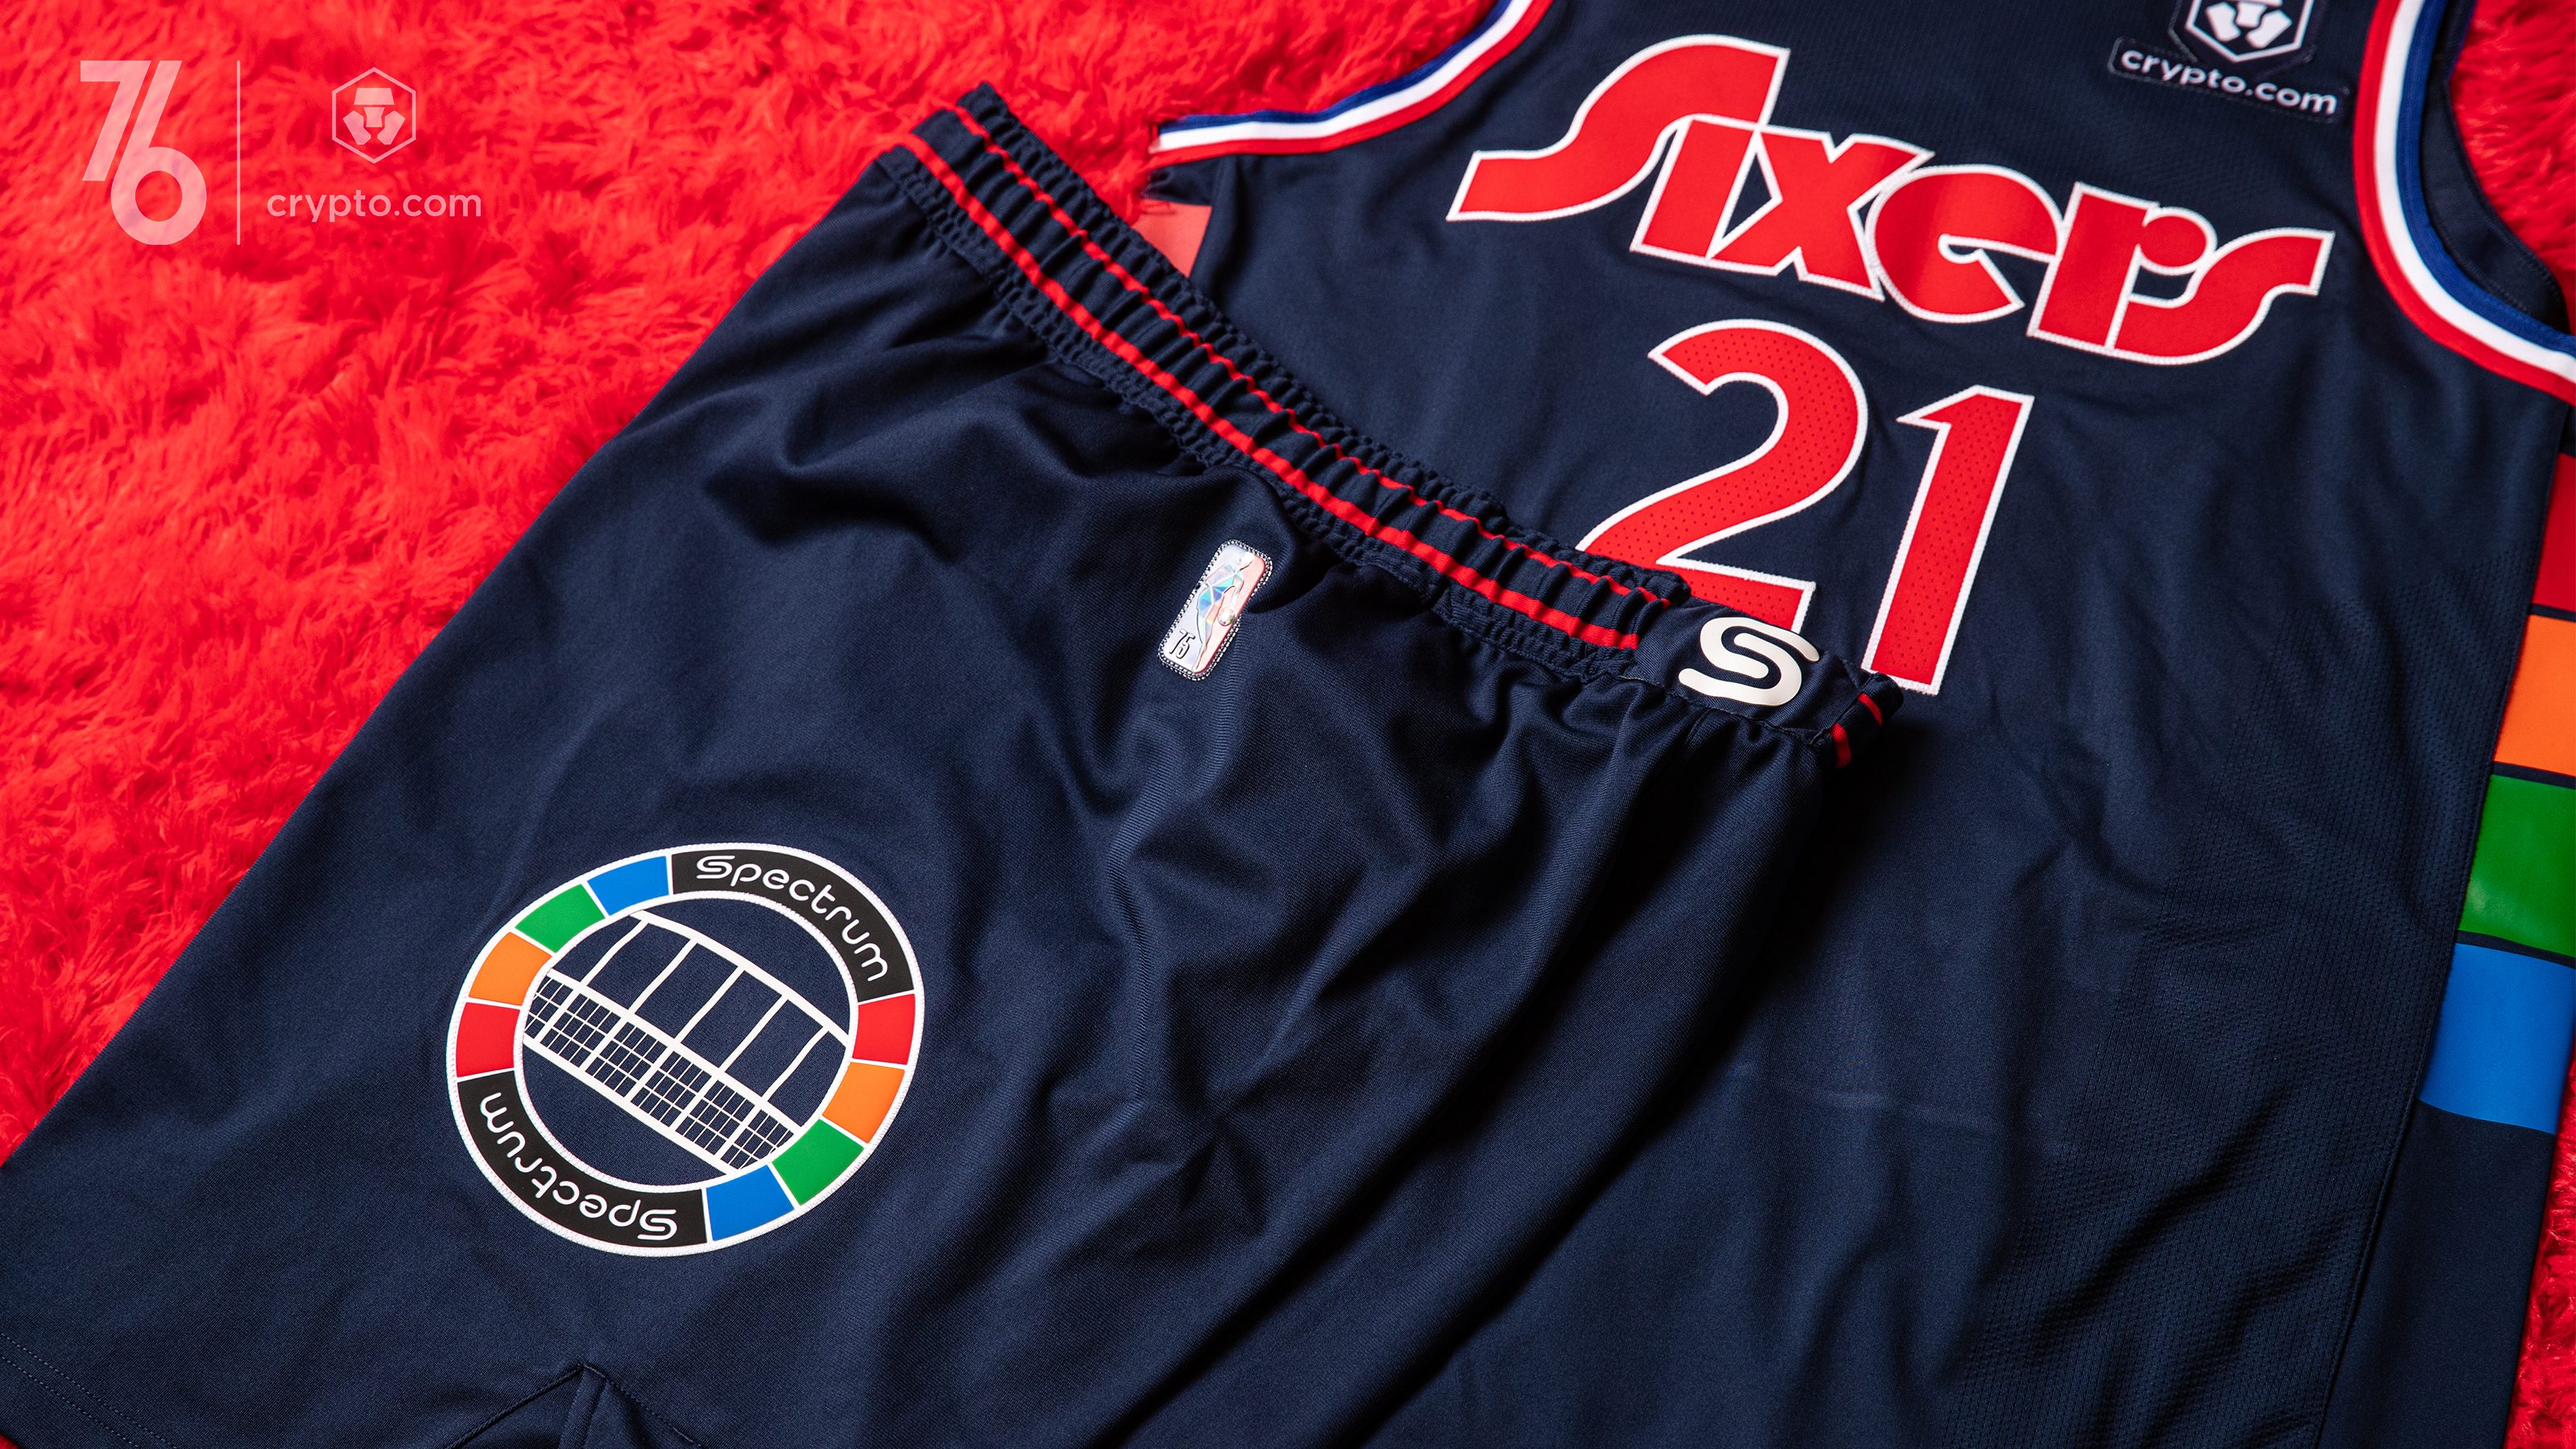 76ers (black), Magic (orange) unveil new alternate jerseys - NBC